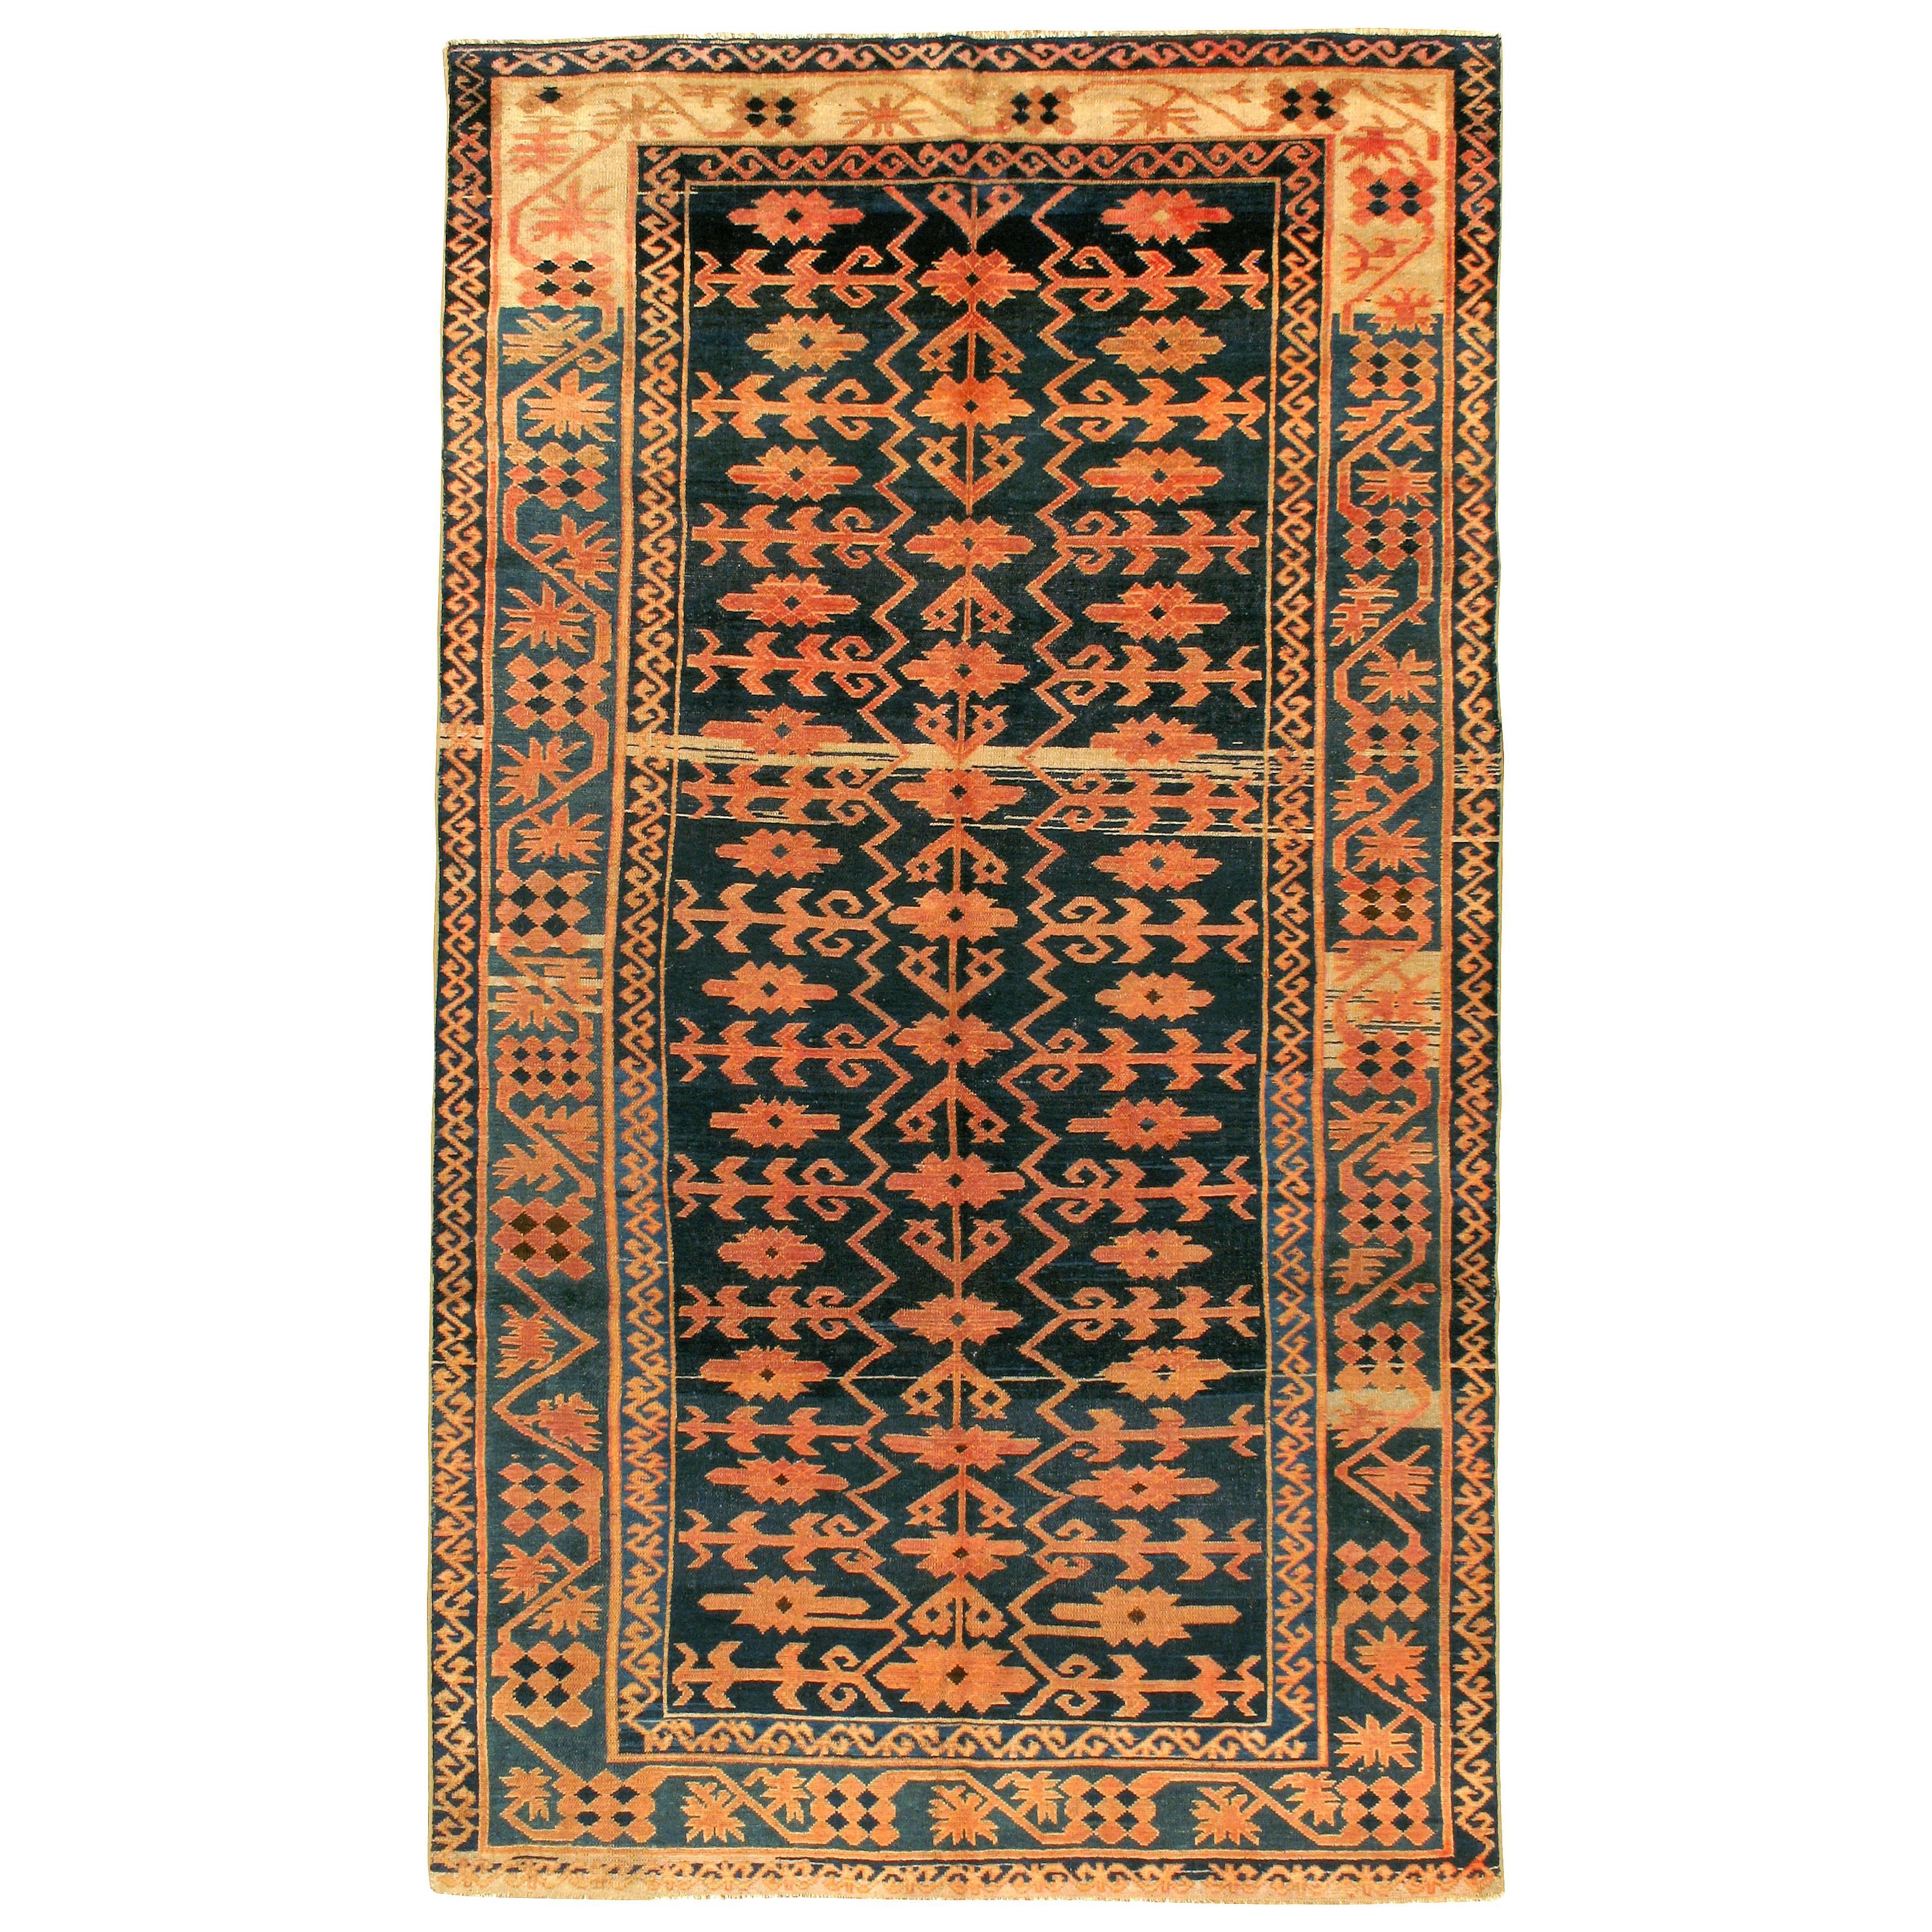 Ancien tapis Kirghiz du Turkestan oriental